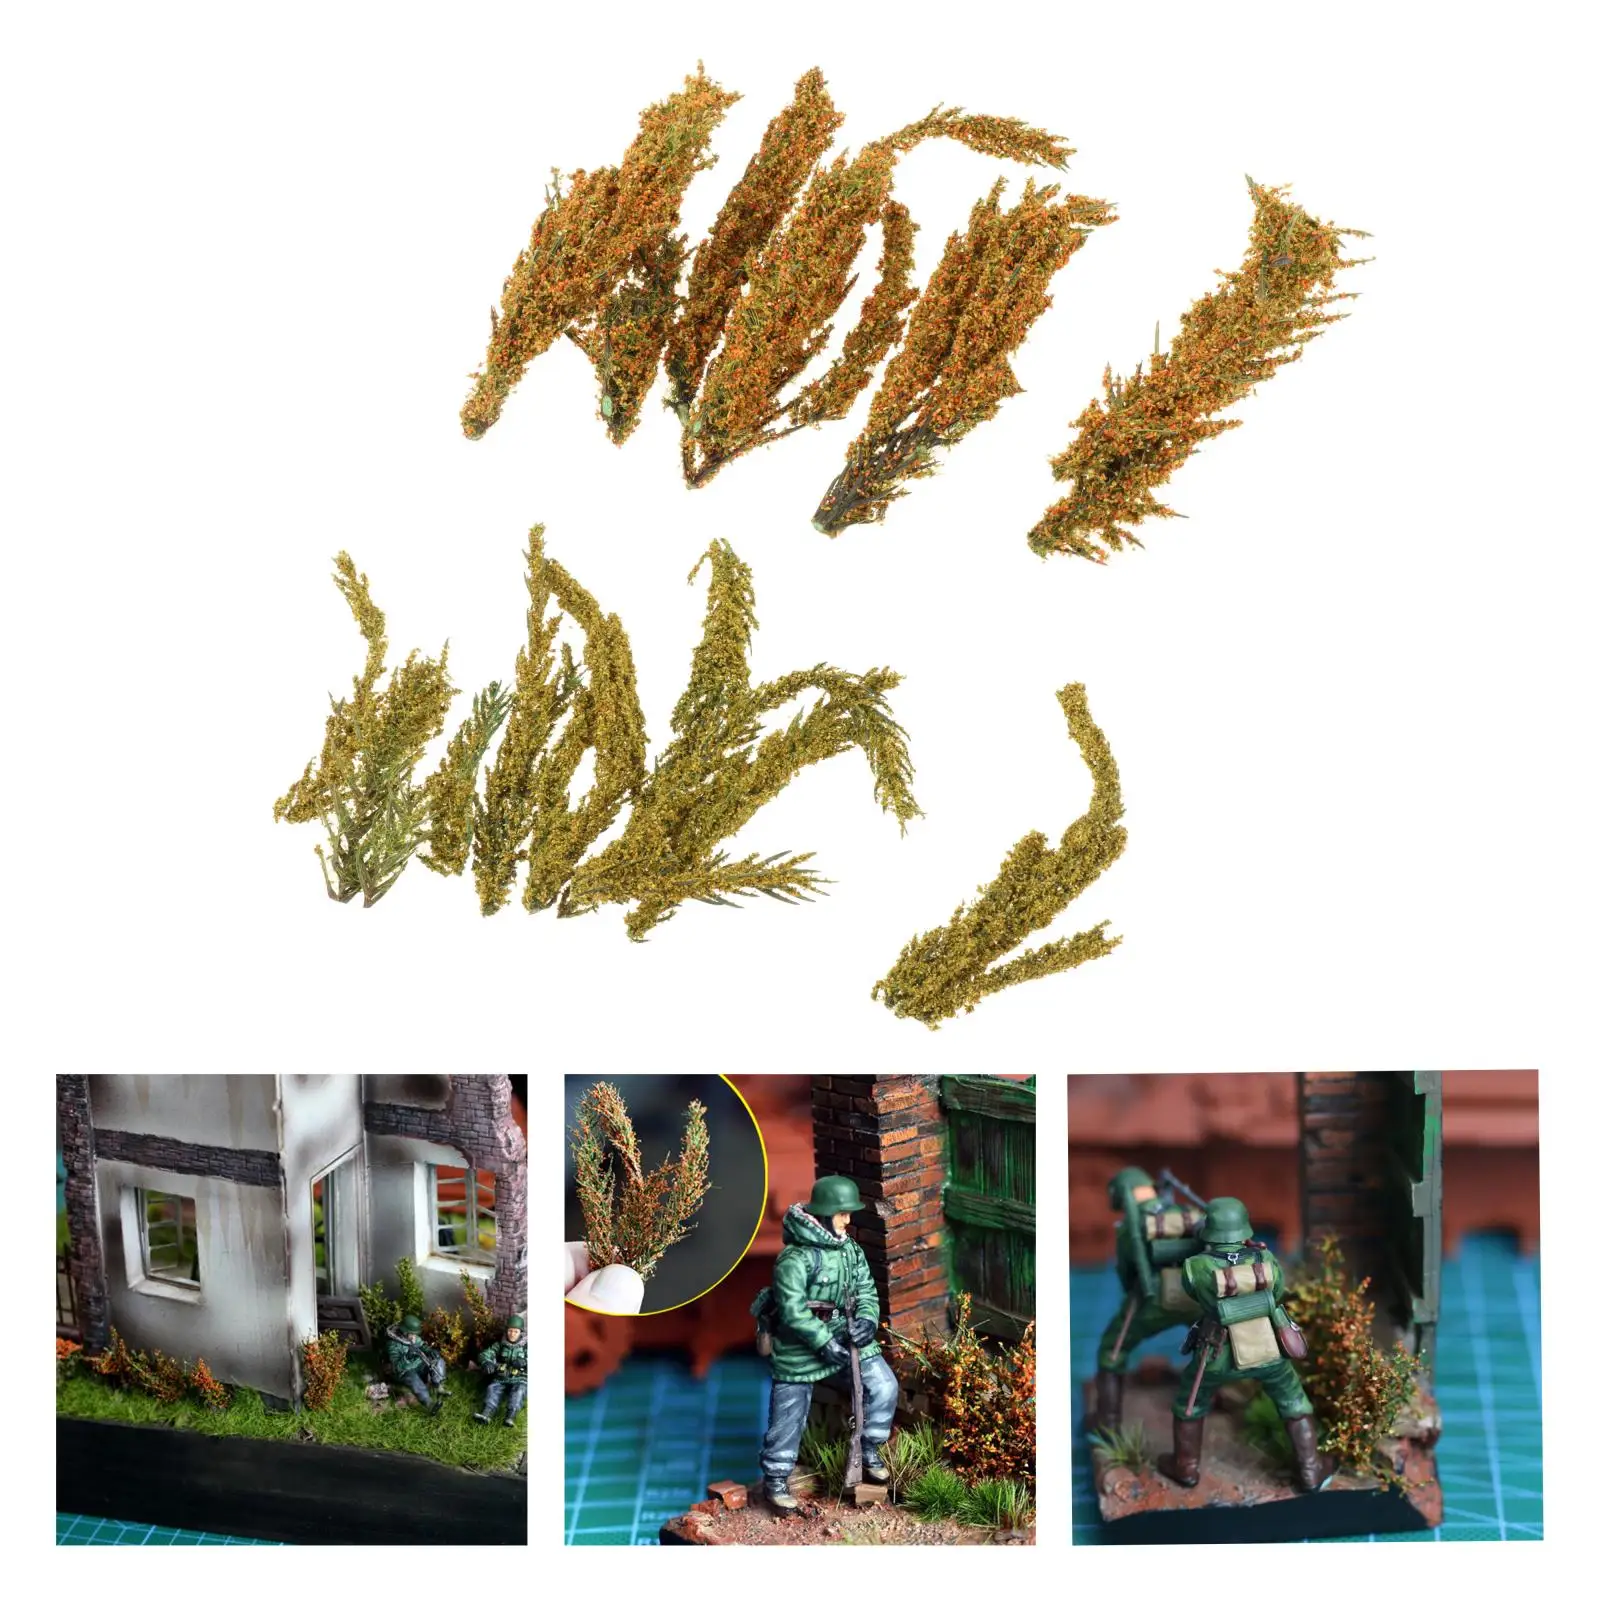  Long Shrub Vegetation groups Bush Miniature Grass Tufts Aritificial Plants for Model Train   Table Landscape